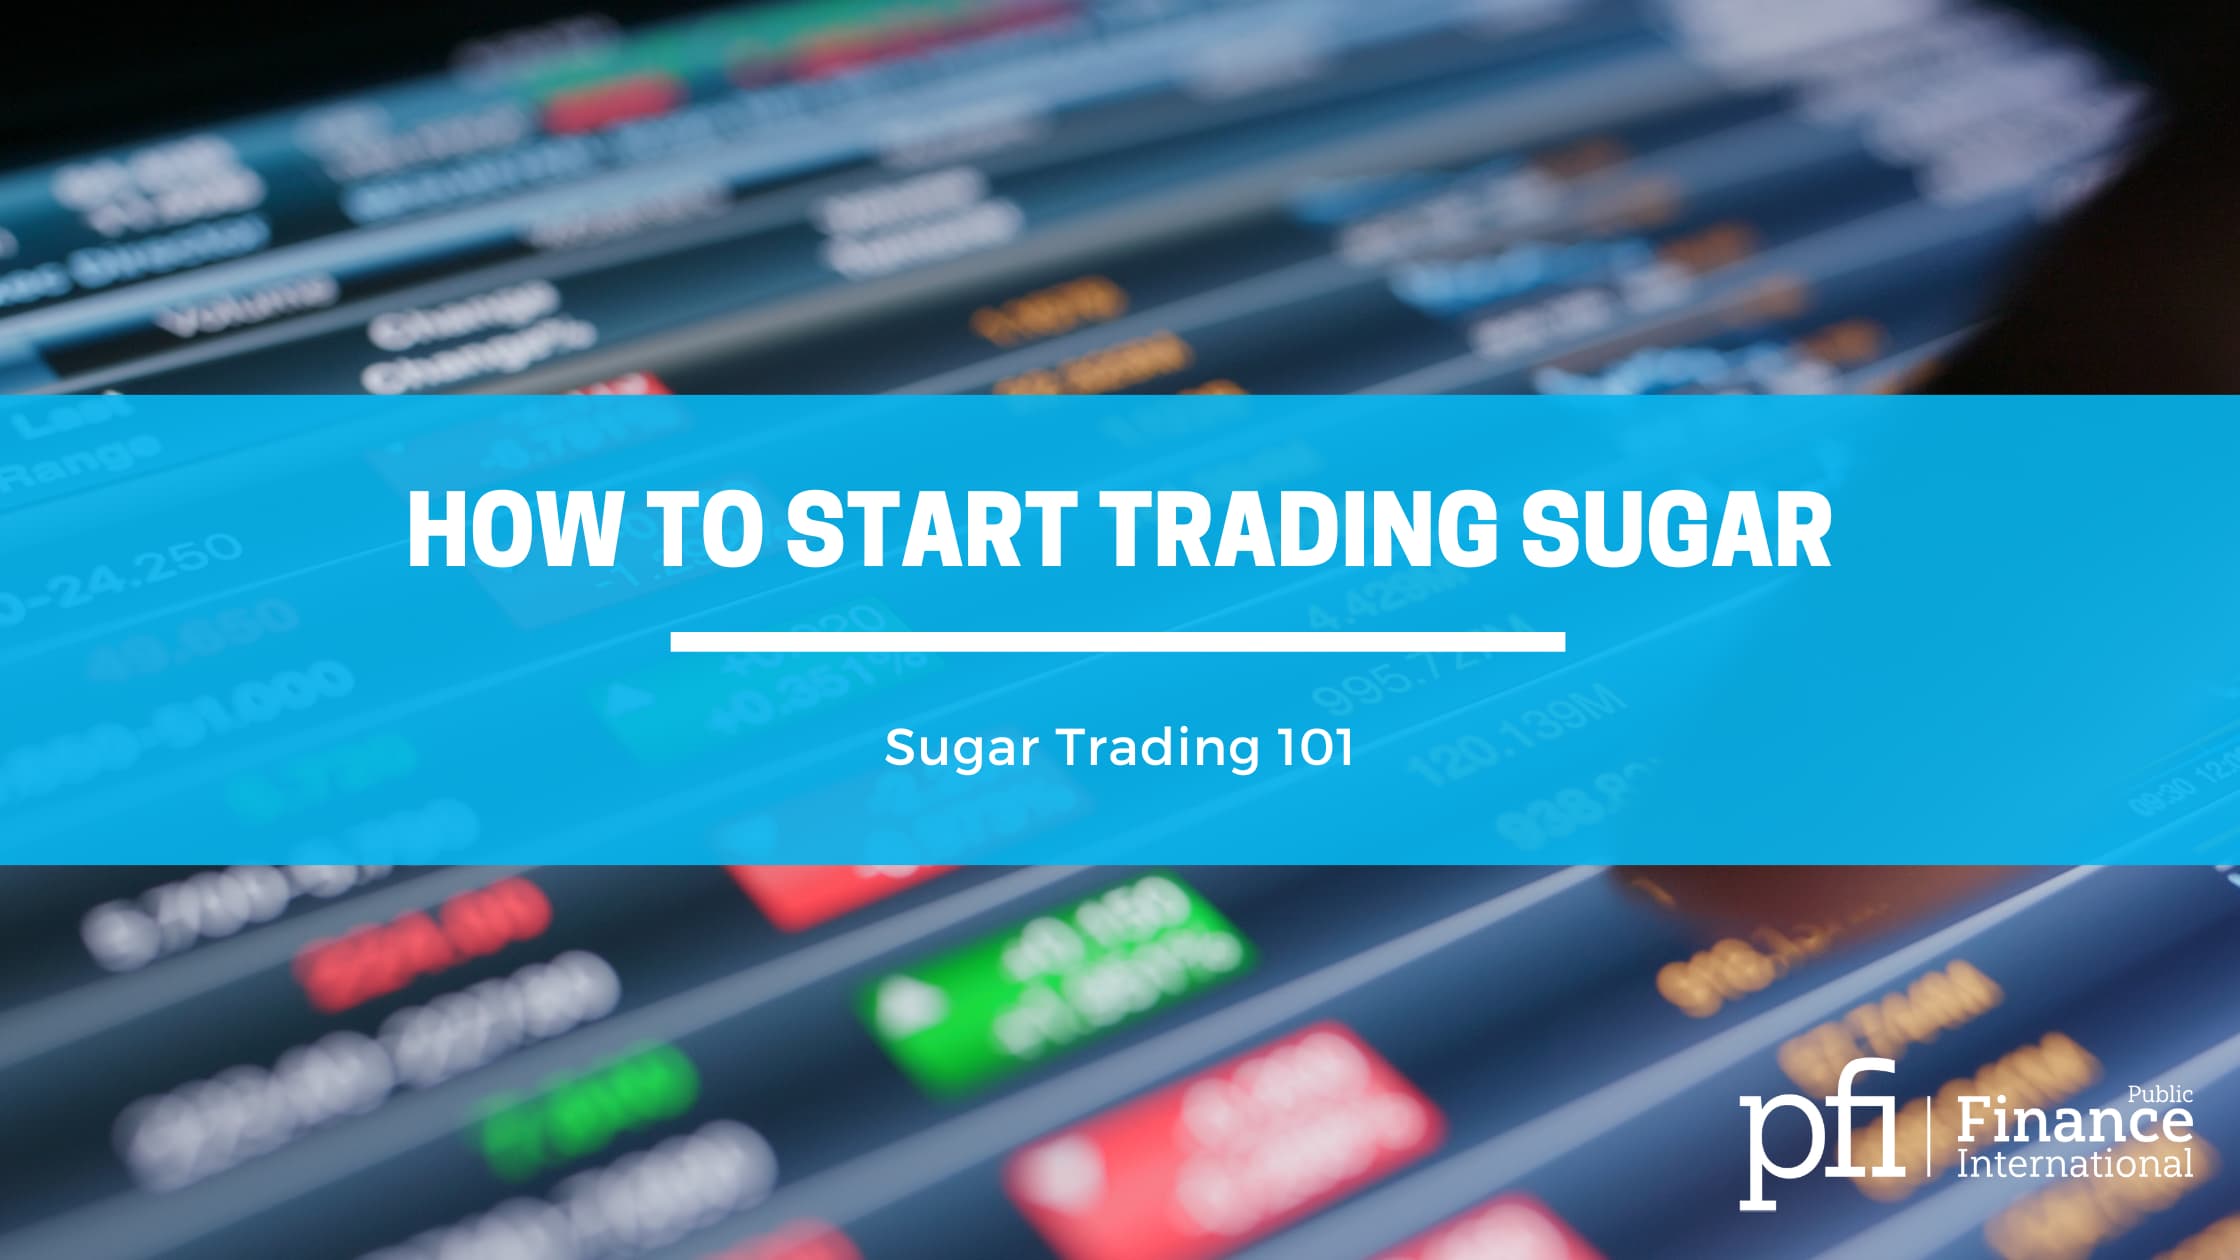 Sugar Trading